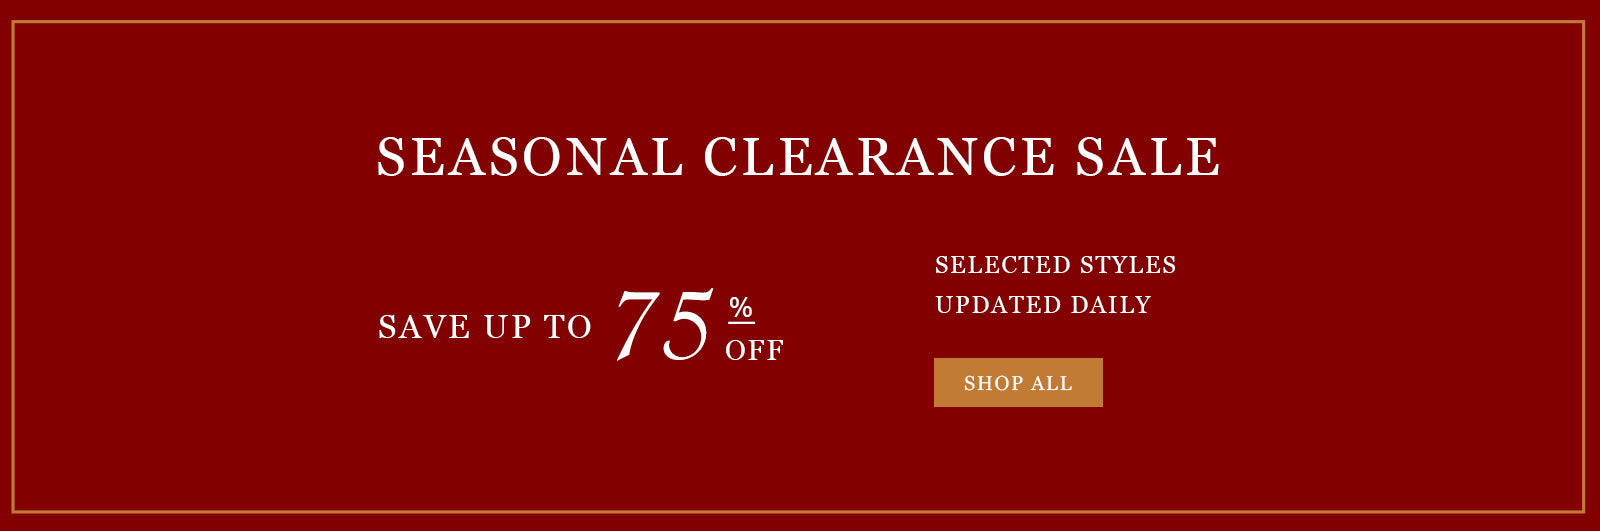 seasonal clearance suit sale